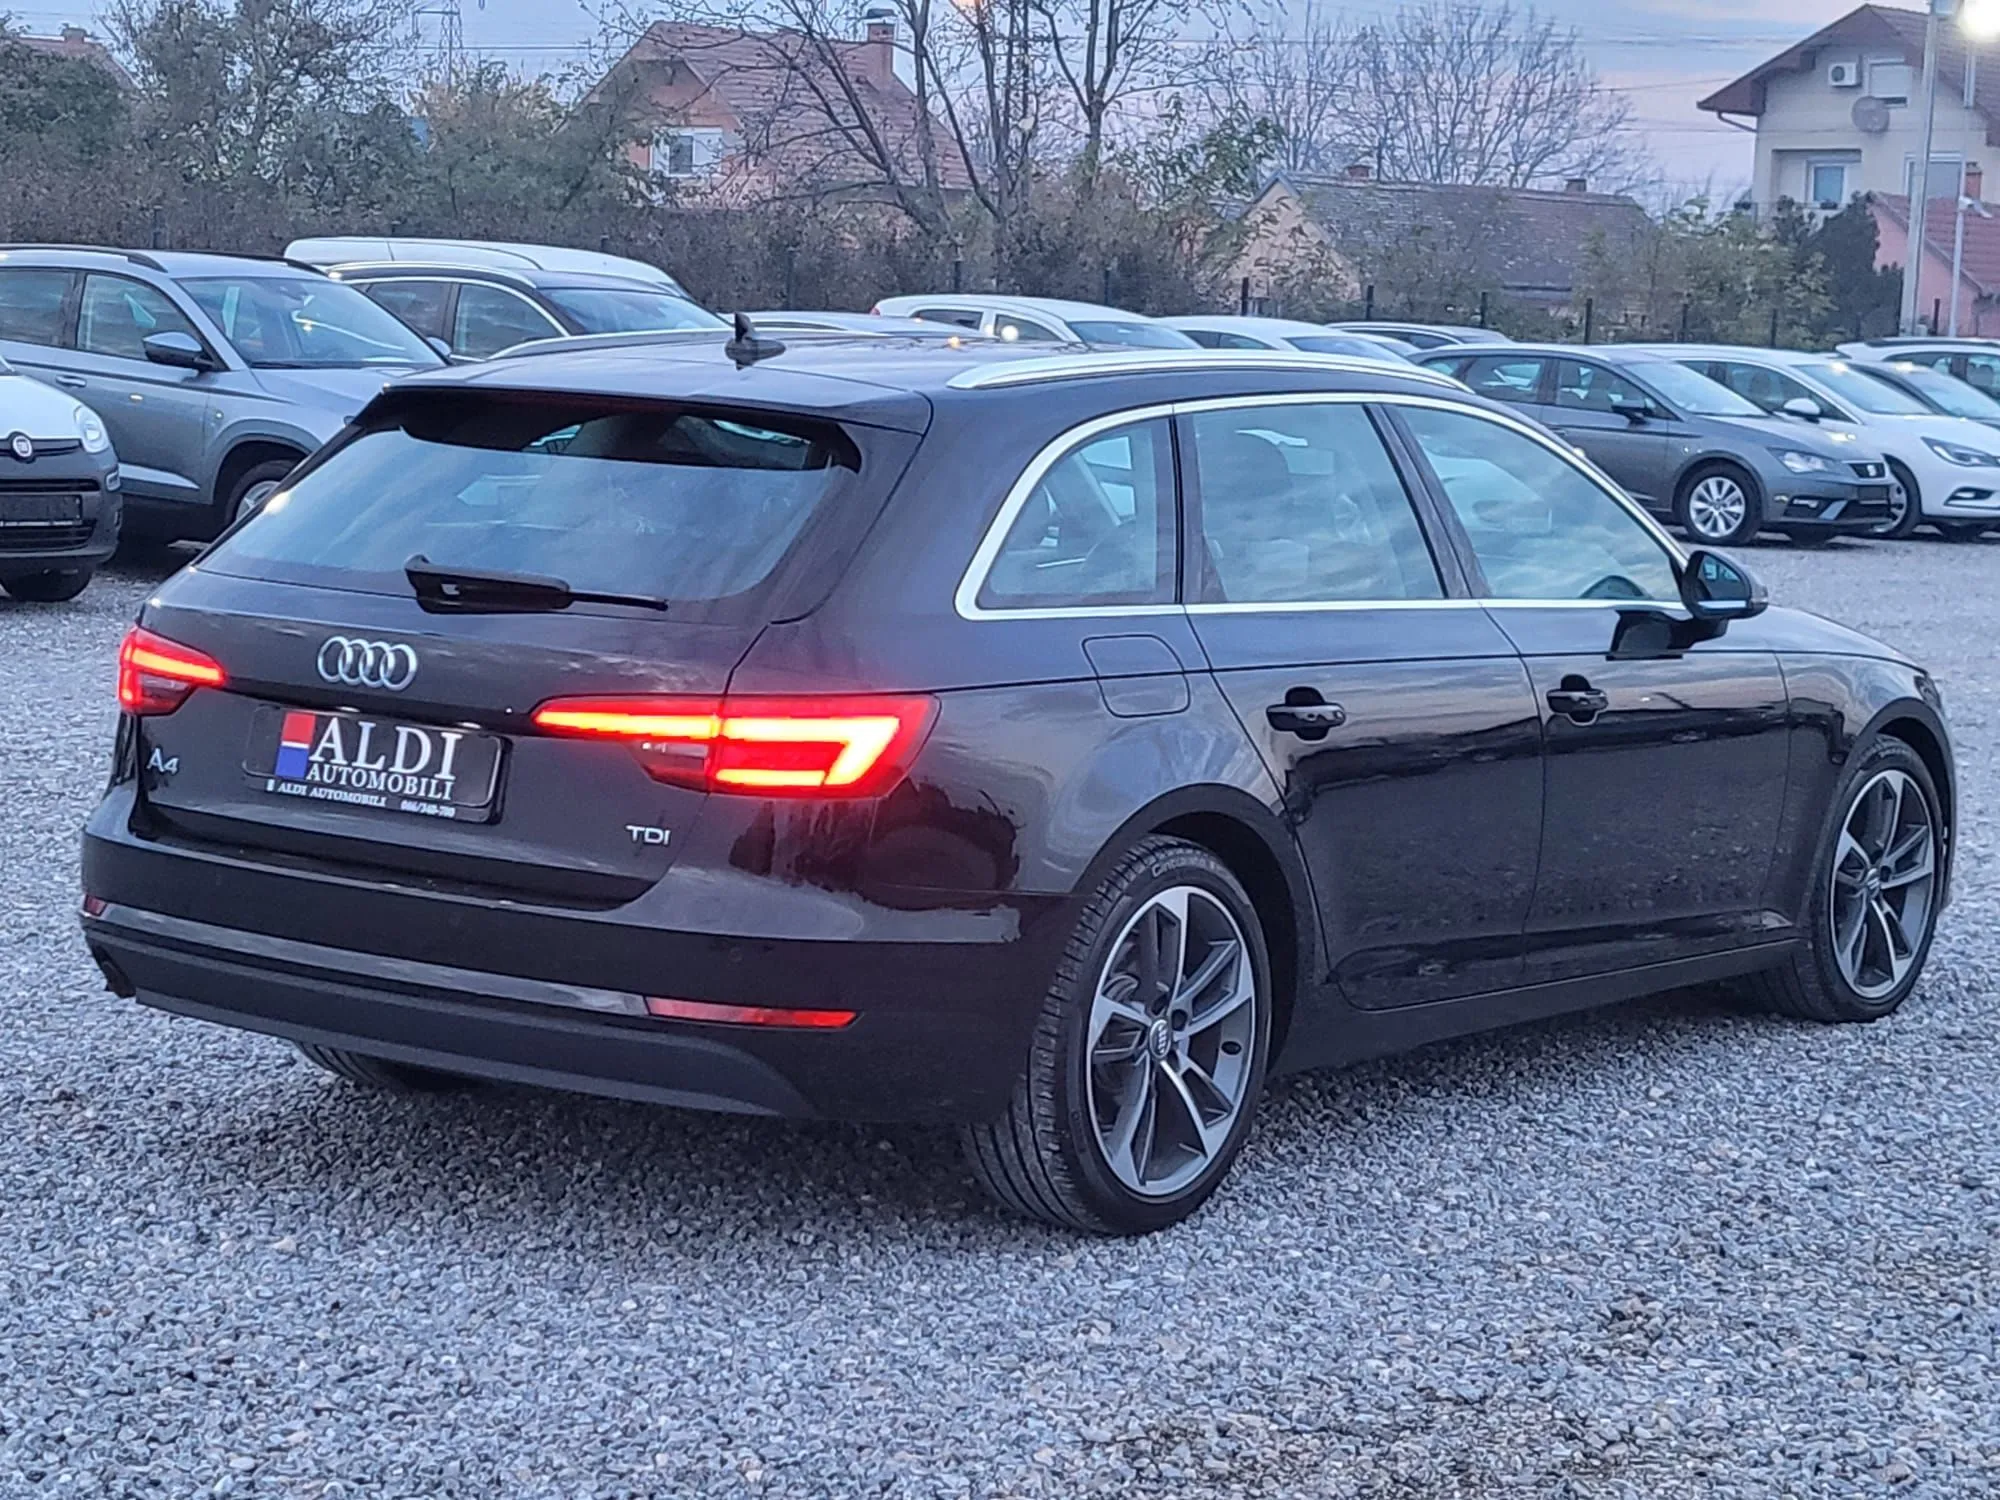 Audi A4 2.0/S-tronic Image 7